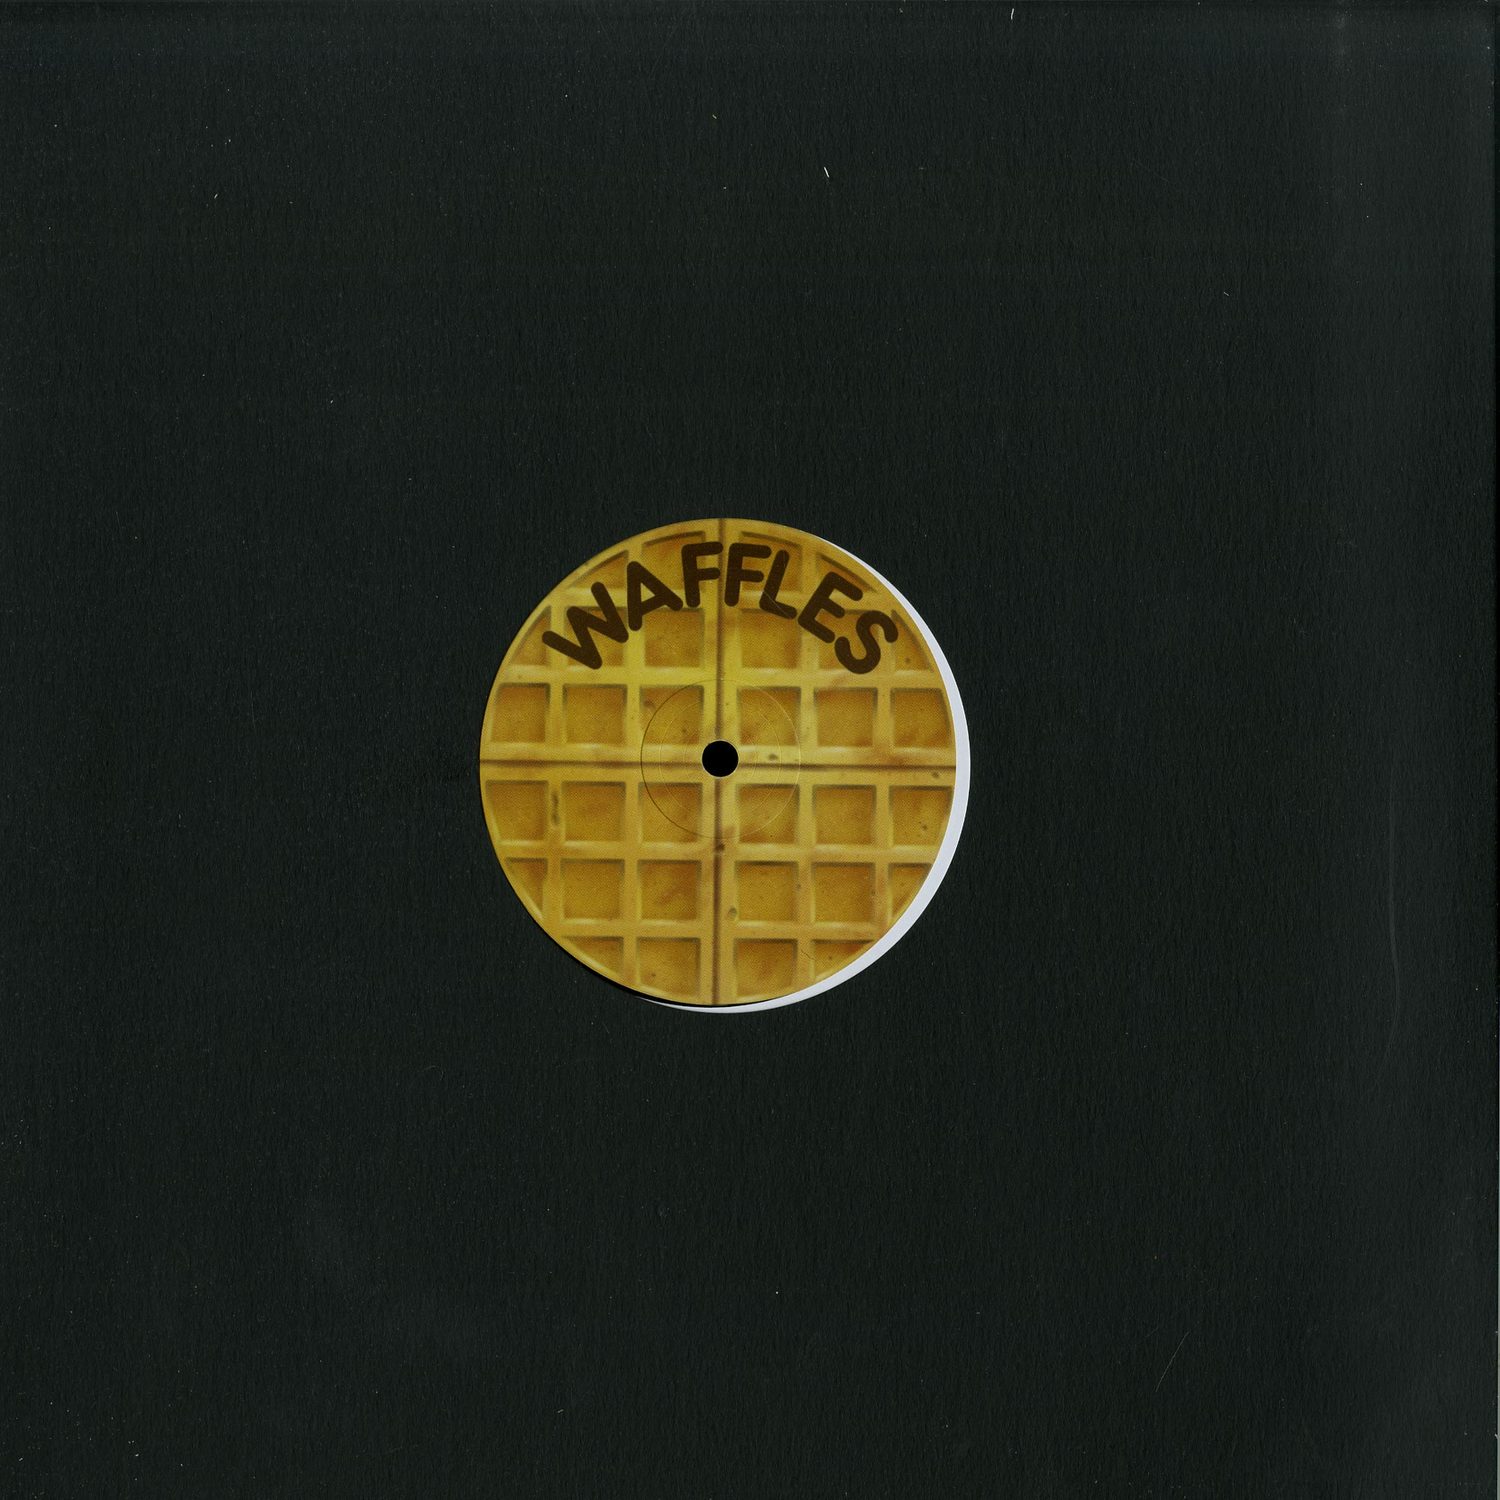 Waffles - WAFFLES005